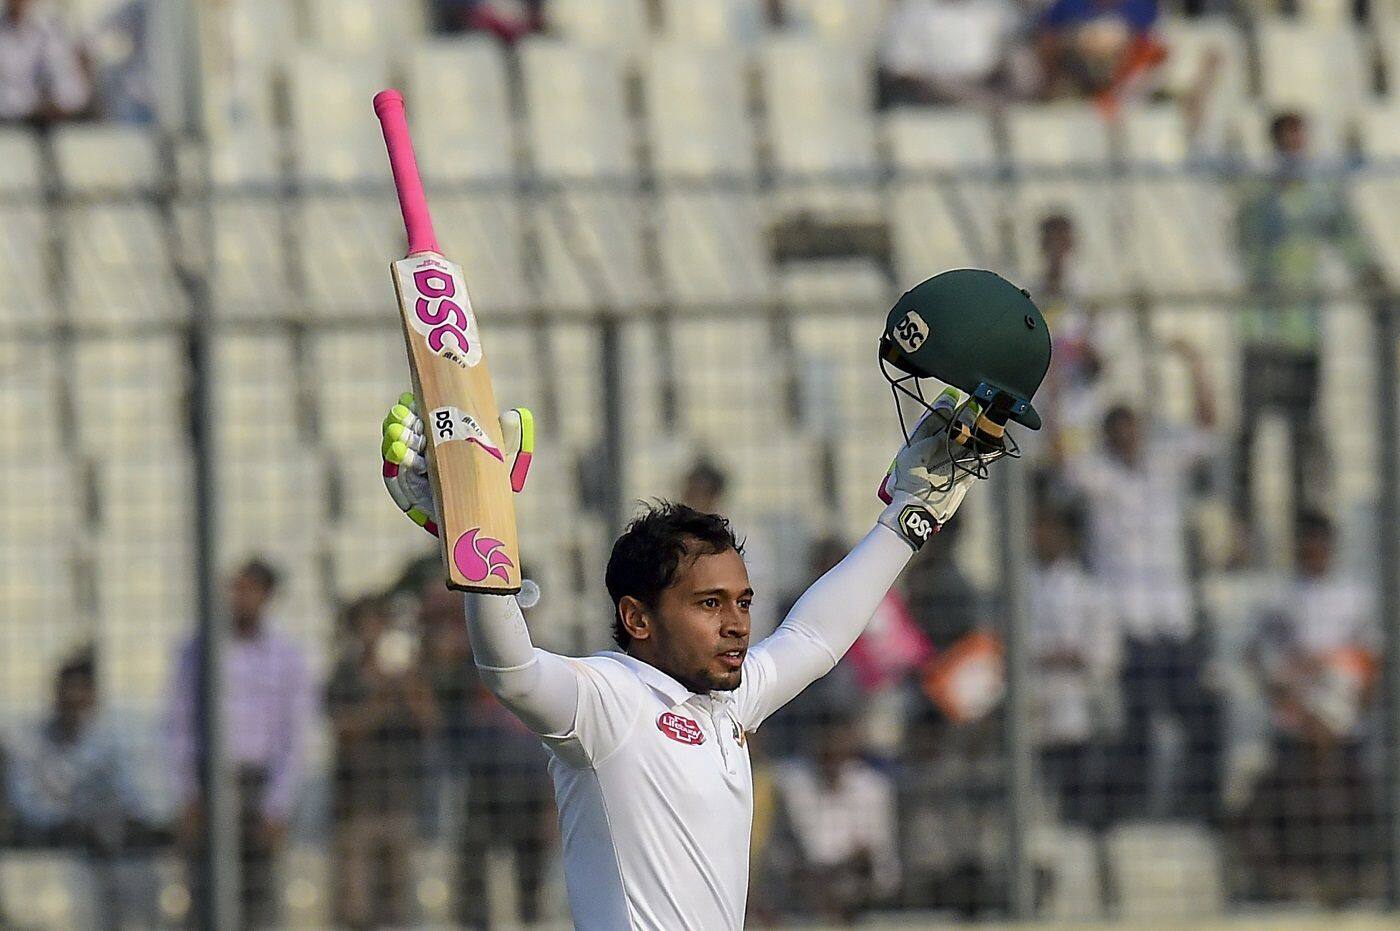 Covid-19 relief efforts: Bangladesh batsman Mushfiqur Rahim puts up bat for auction